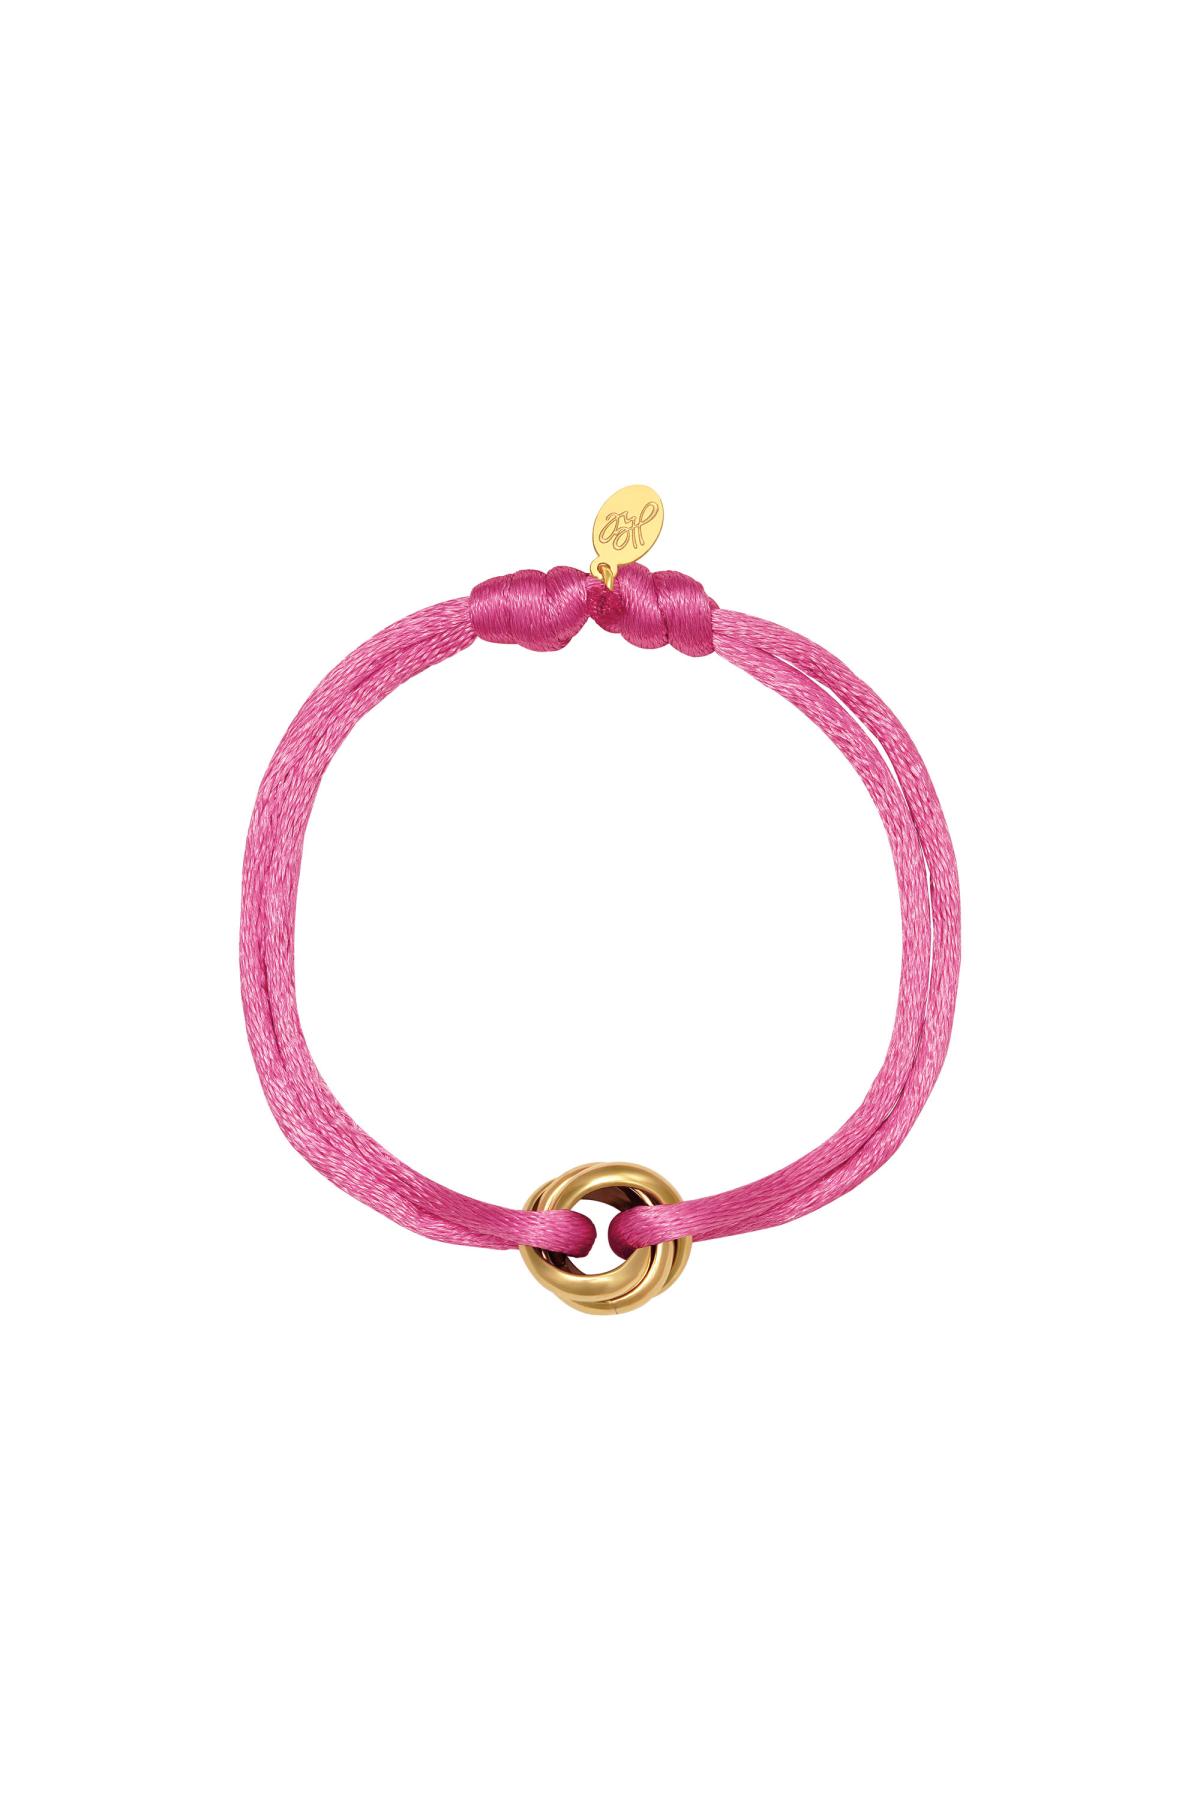 Baby Pink & Gold / Saten bileklik düğüm Baby Pink & Gold Polyester Resim10